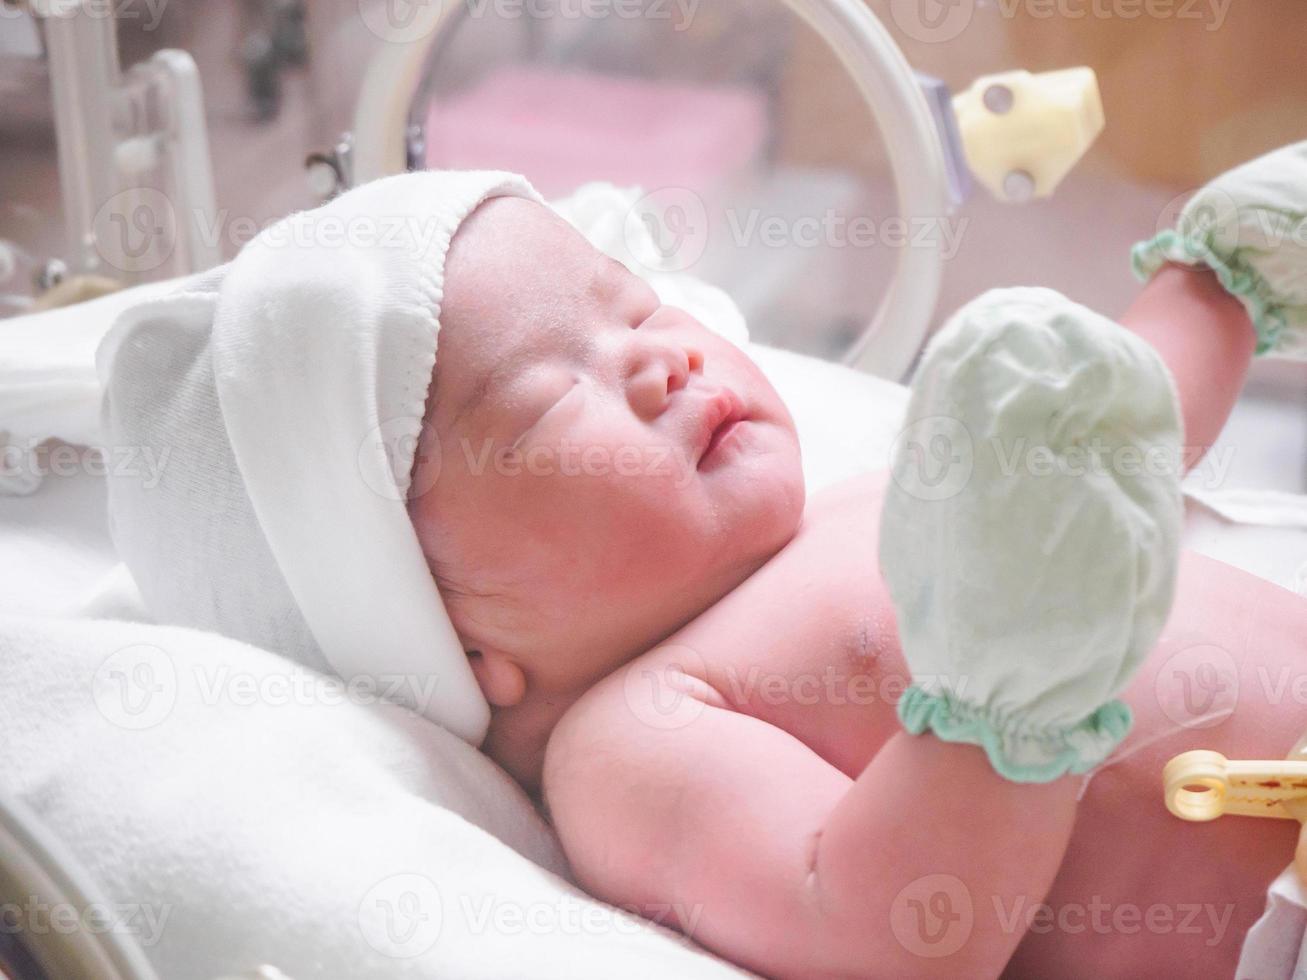 pasgeboren baby meisje binnen incubator in ziekenhuis post levering kamer foto